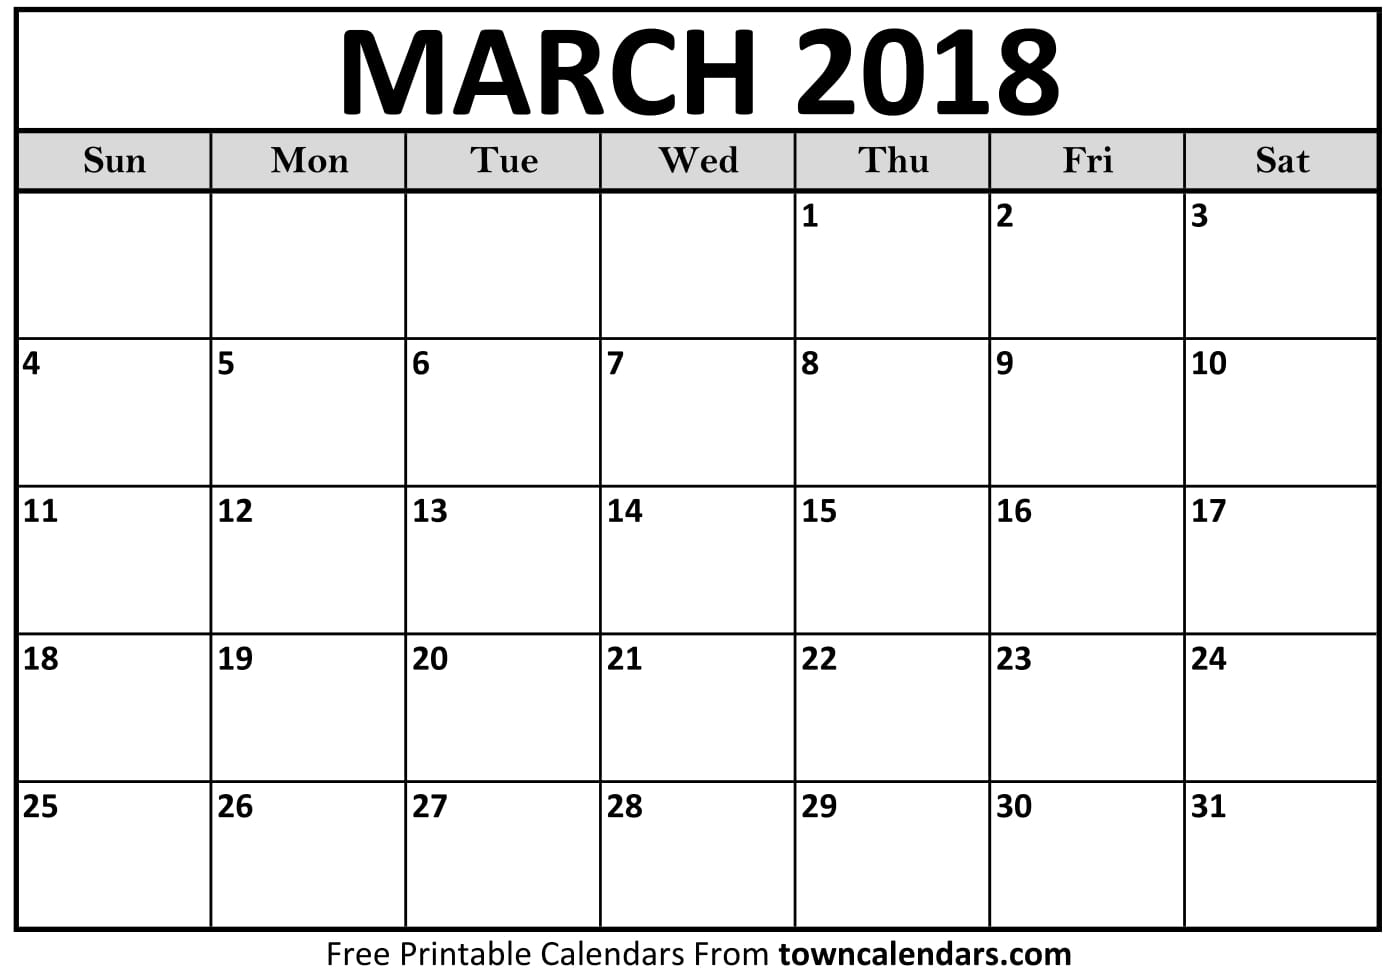 Printable March 2018 Calendar - Towncalendars - Free Printable March Activities